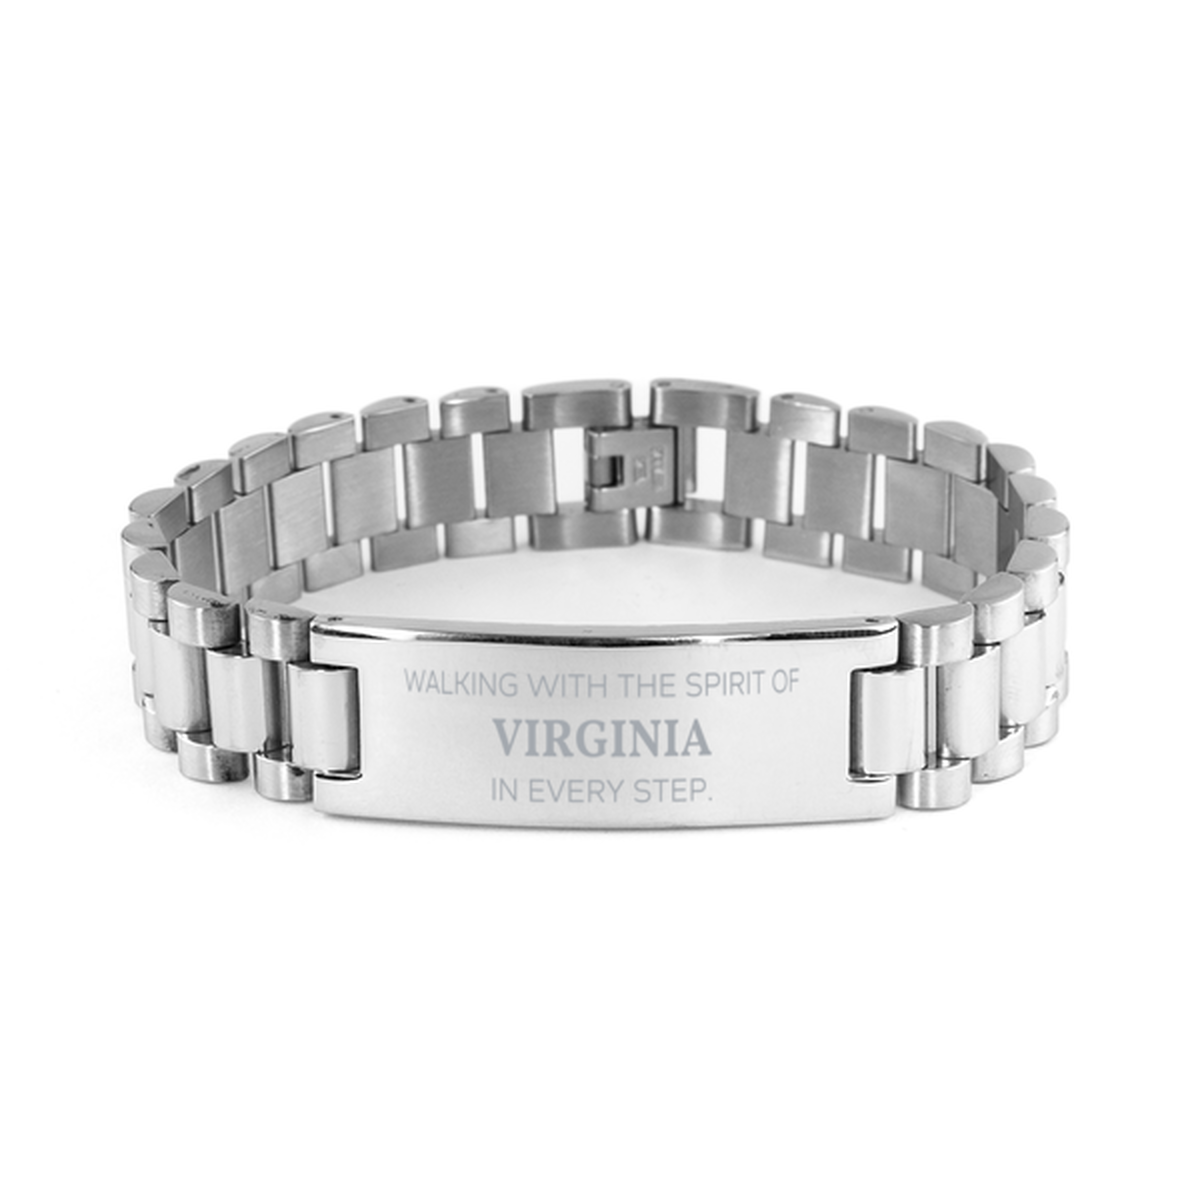 Virginia Gifts, Walking with the spirit, Love Virginia Birthday Christmas Ladder Stainless Steel Bracelet For Virginia People, Men, Women, Friends